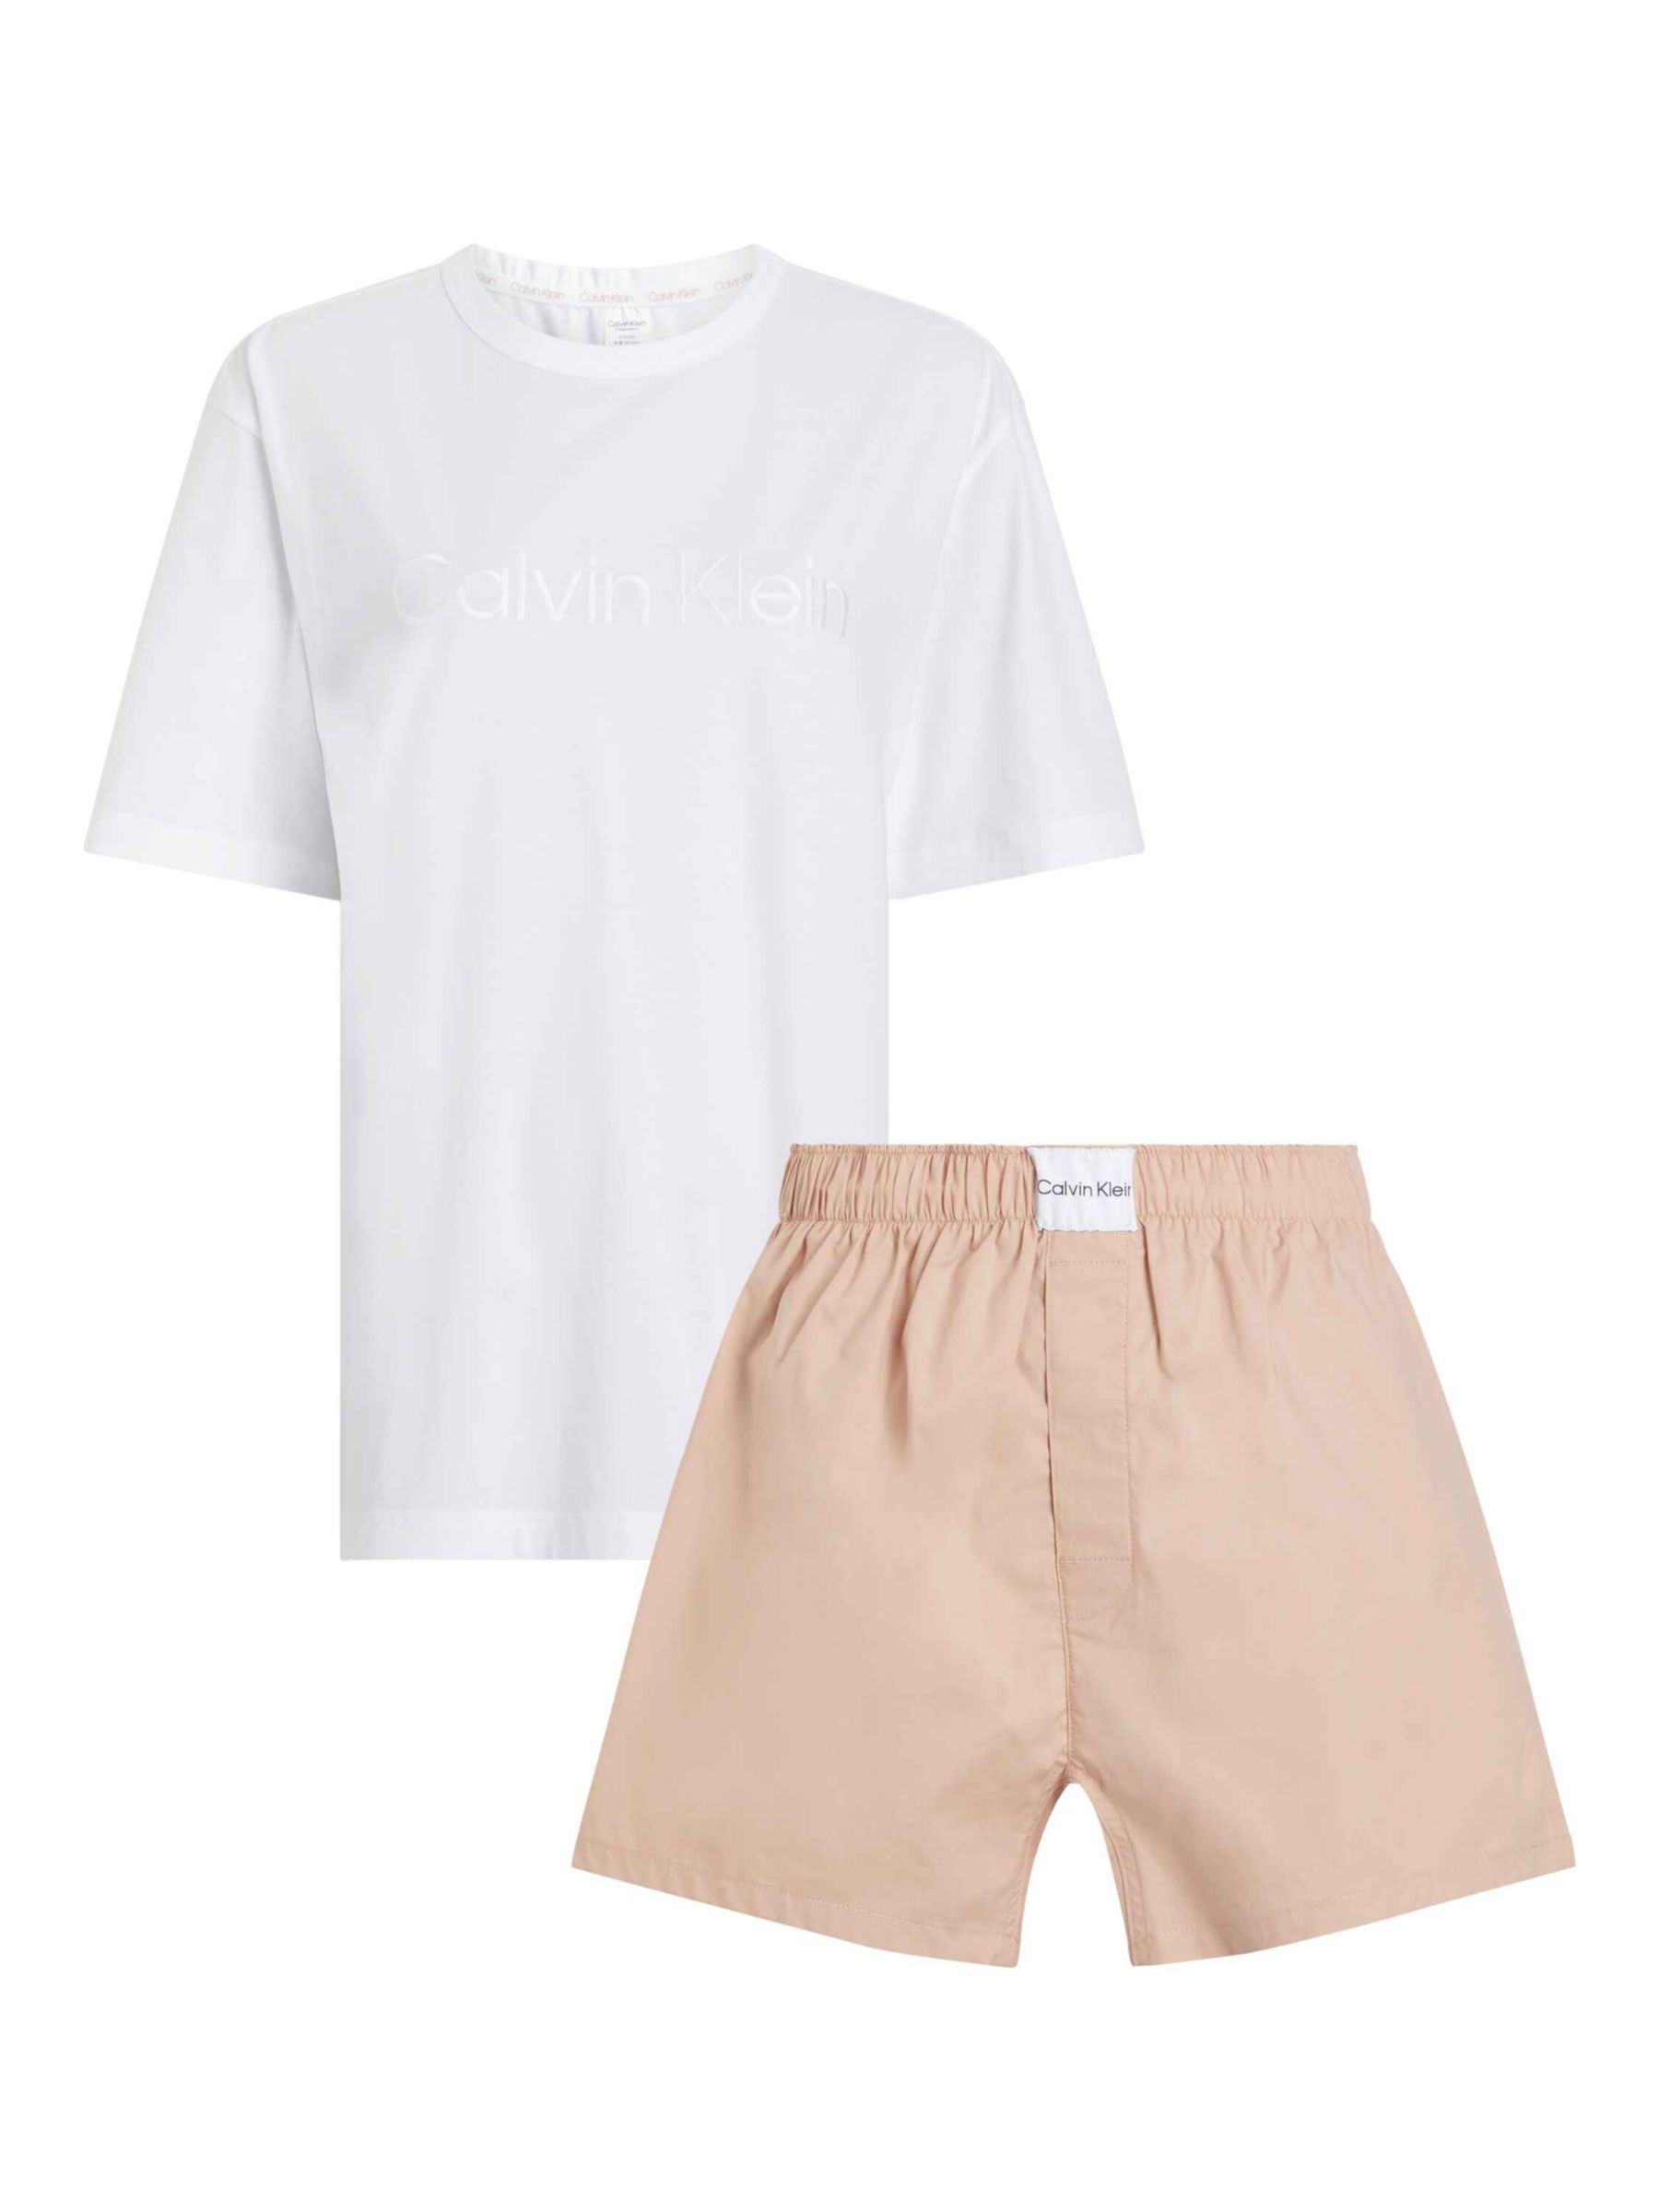 Calvin Klein T-Shirt & Shorts Pyjama Set, White/Neutral, M